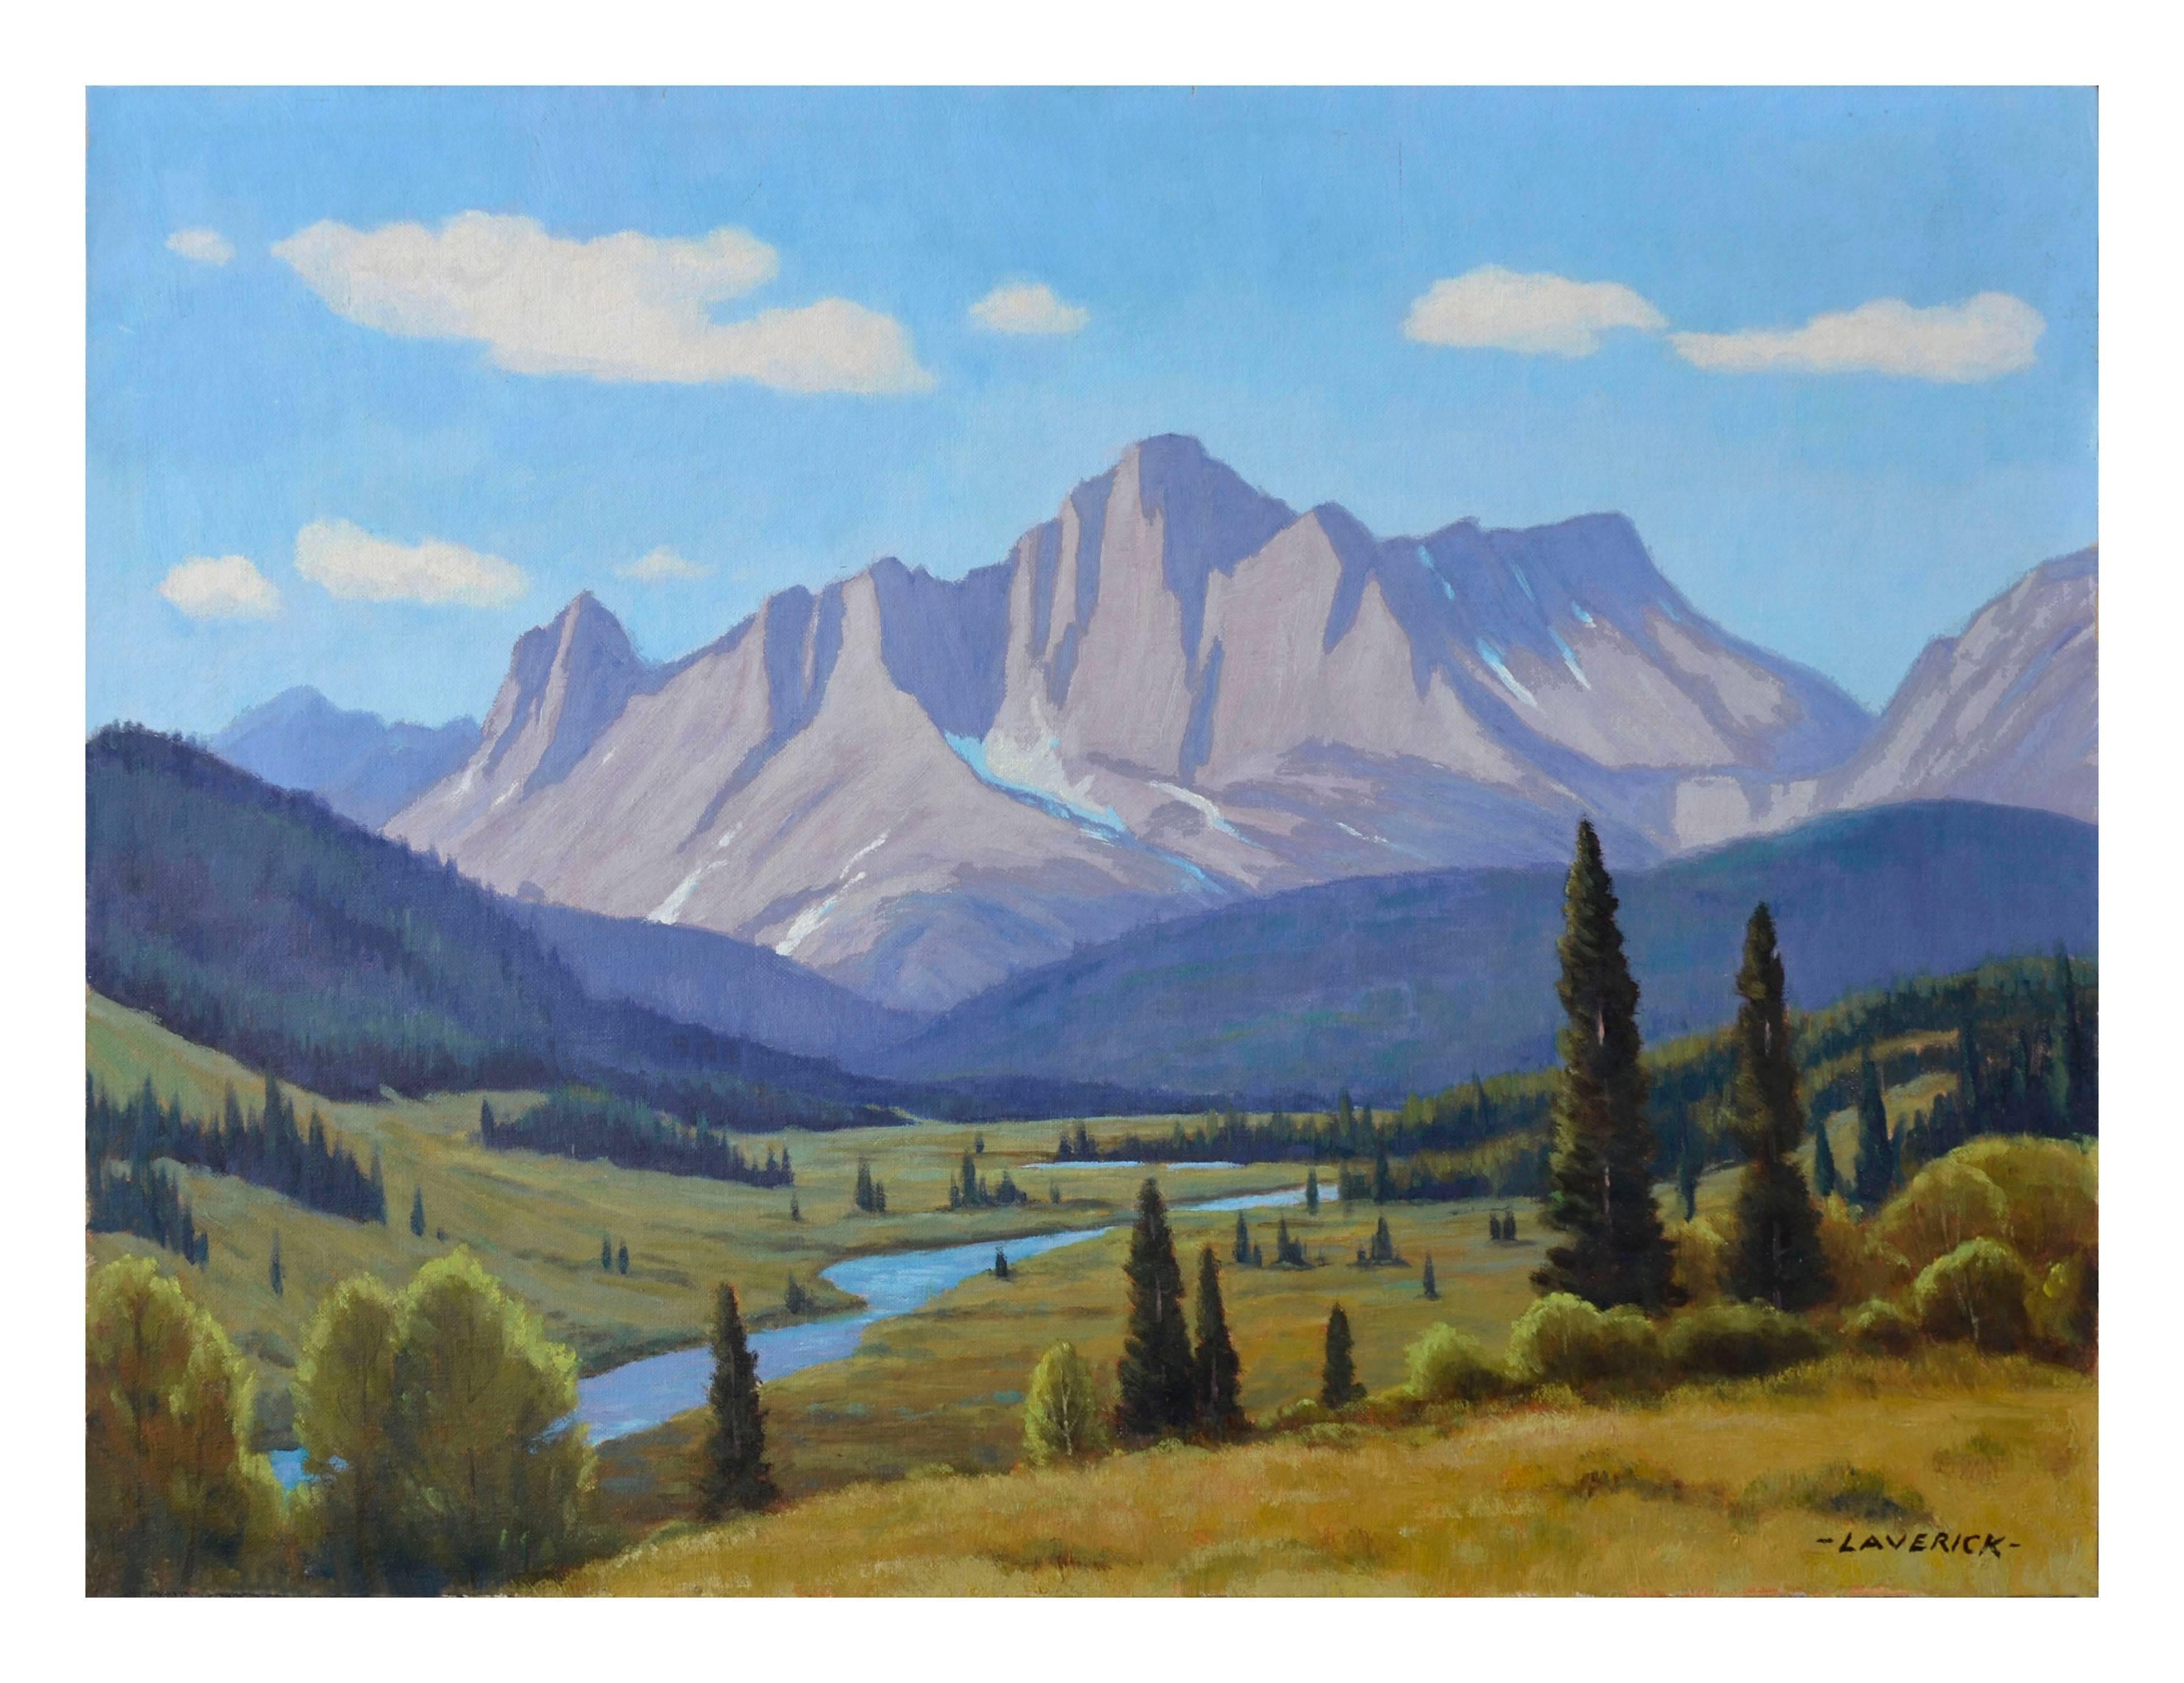 Lloyd C. Laverick Landscape Painting - Cataract Creek, Alberta - Canadian Mountain River Valley Landscape 